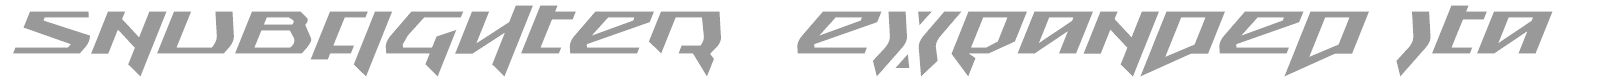 Font Snubfighter Expanded Italic